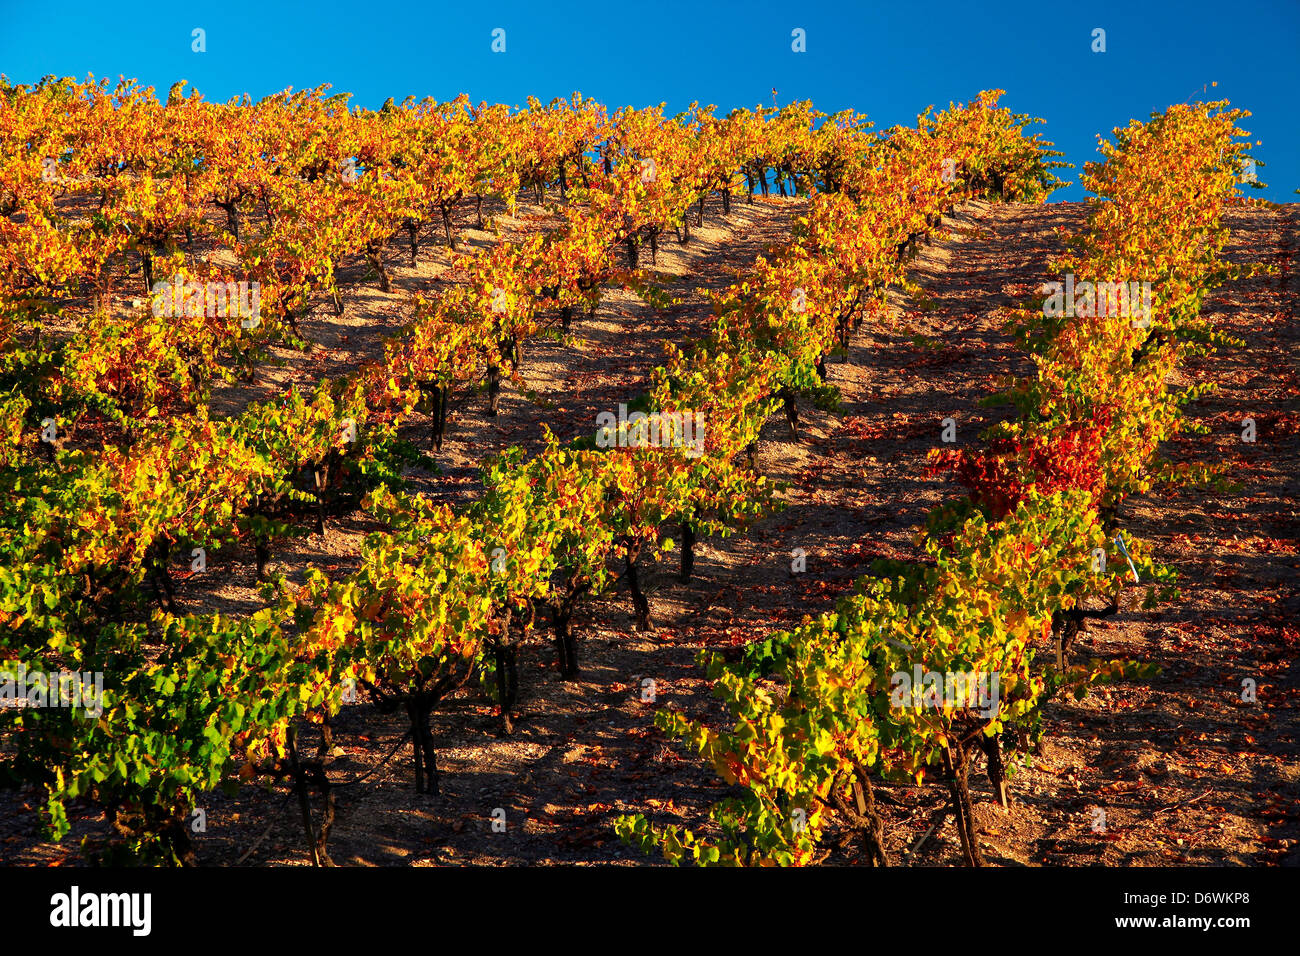 USA, California, San Luis Obispo County, Vineyard in Autumn Colors Stock Photo